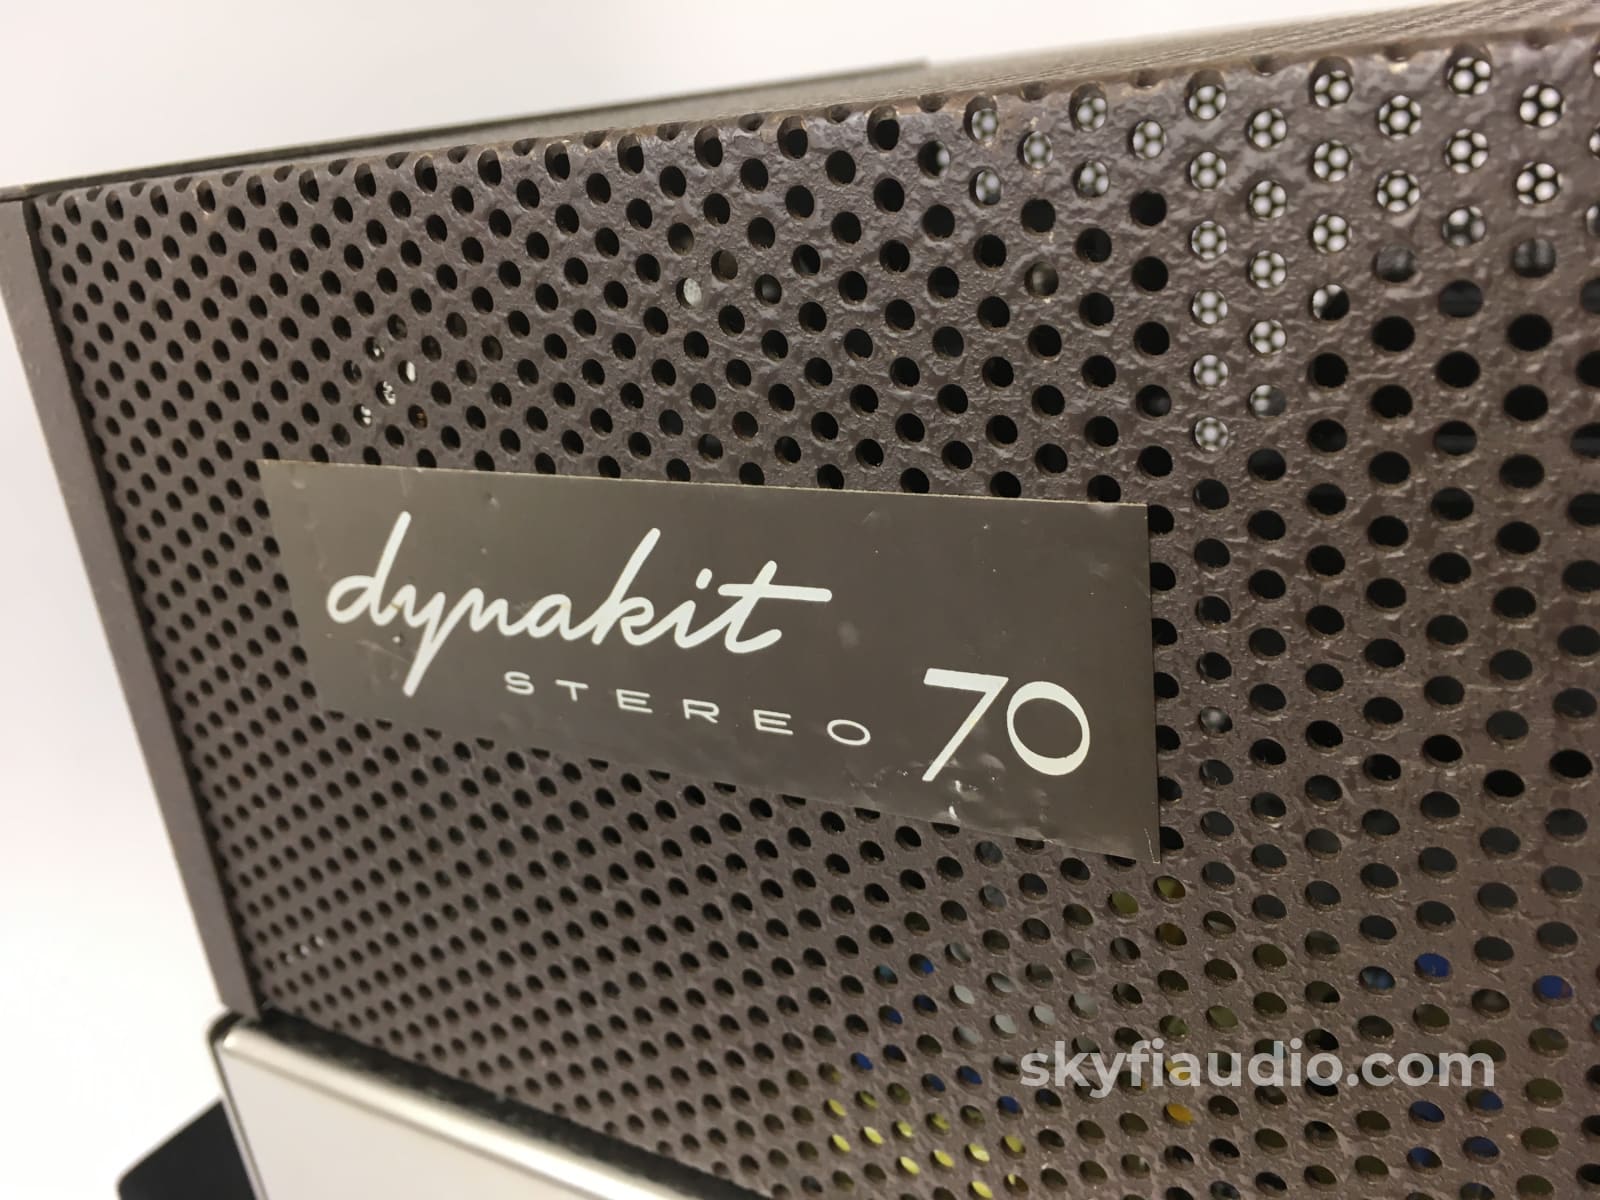 Dynaco Dynakit Stereo 70 Tube Amplifier